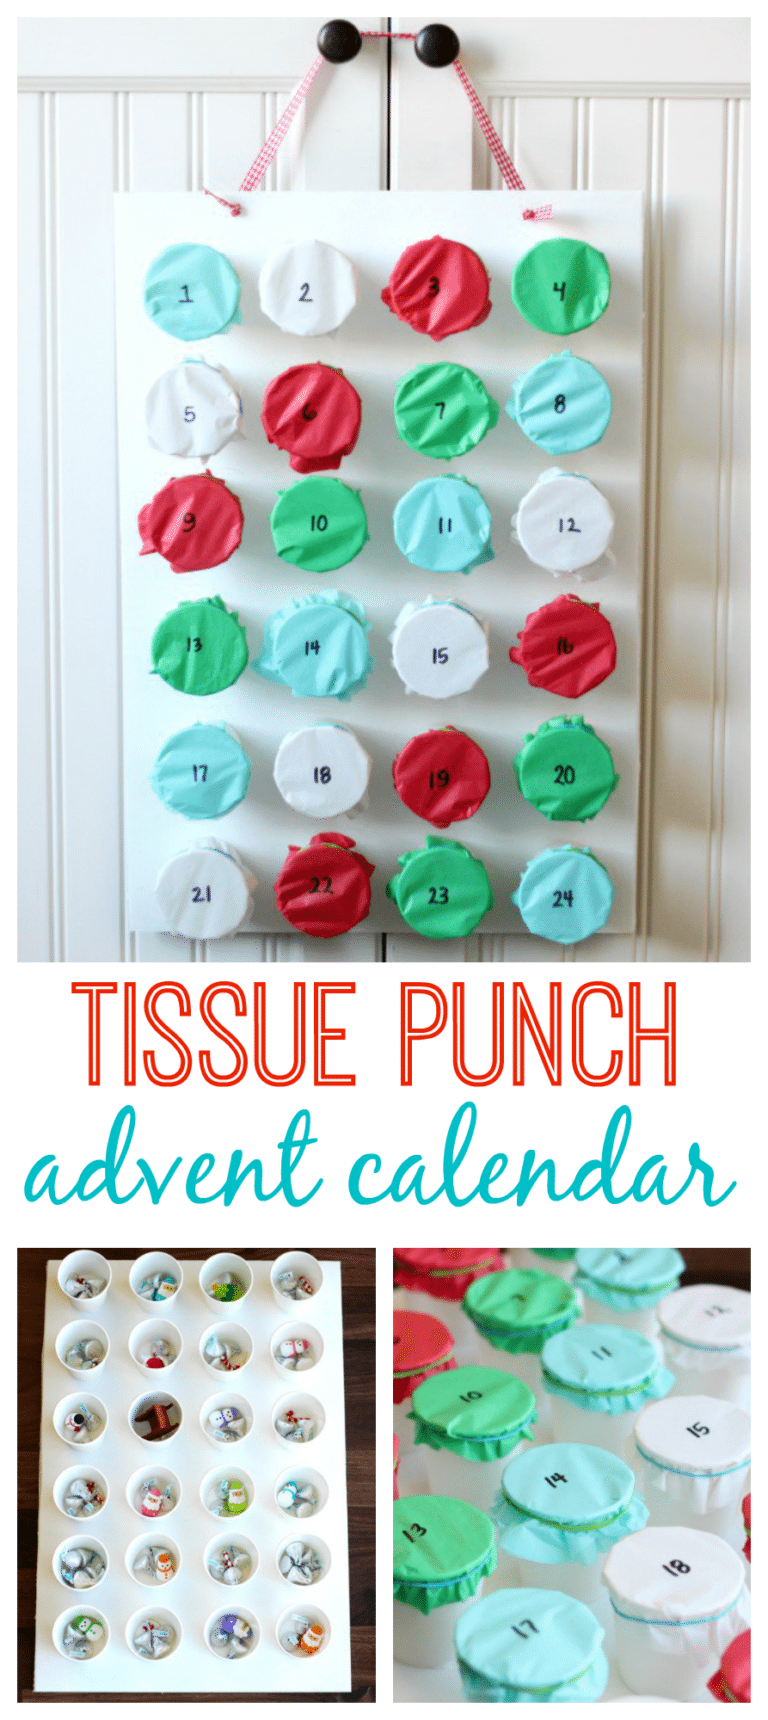 How To Make A Tissue Punch Advent Calendar Gluesticks Blog